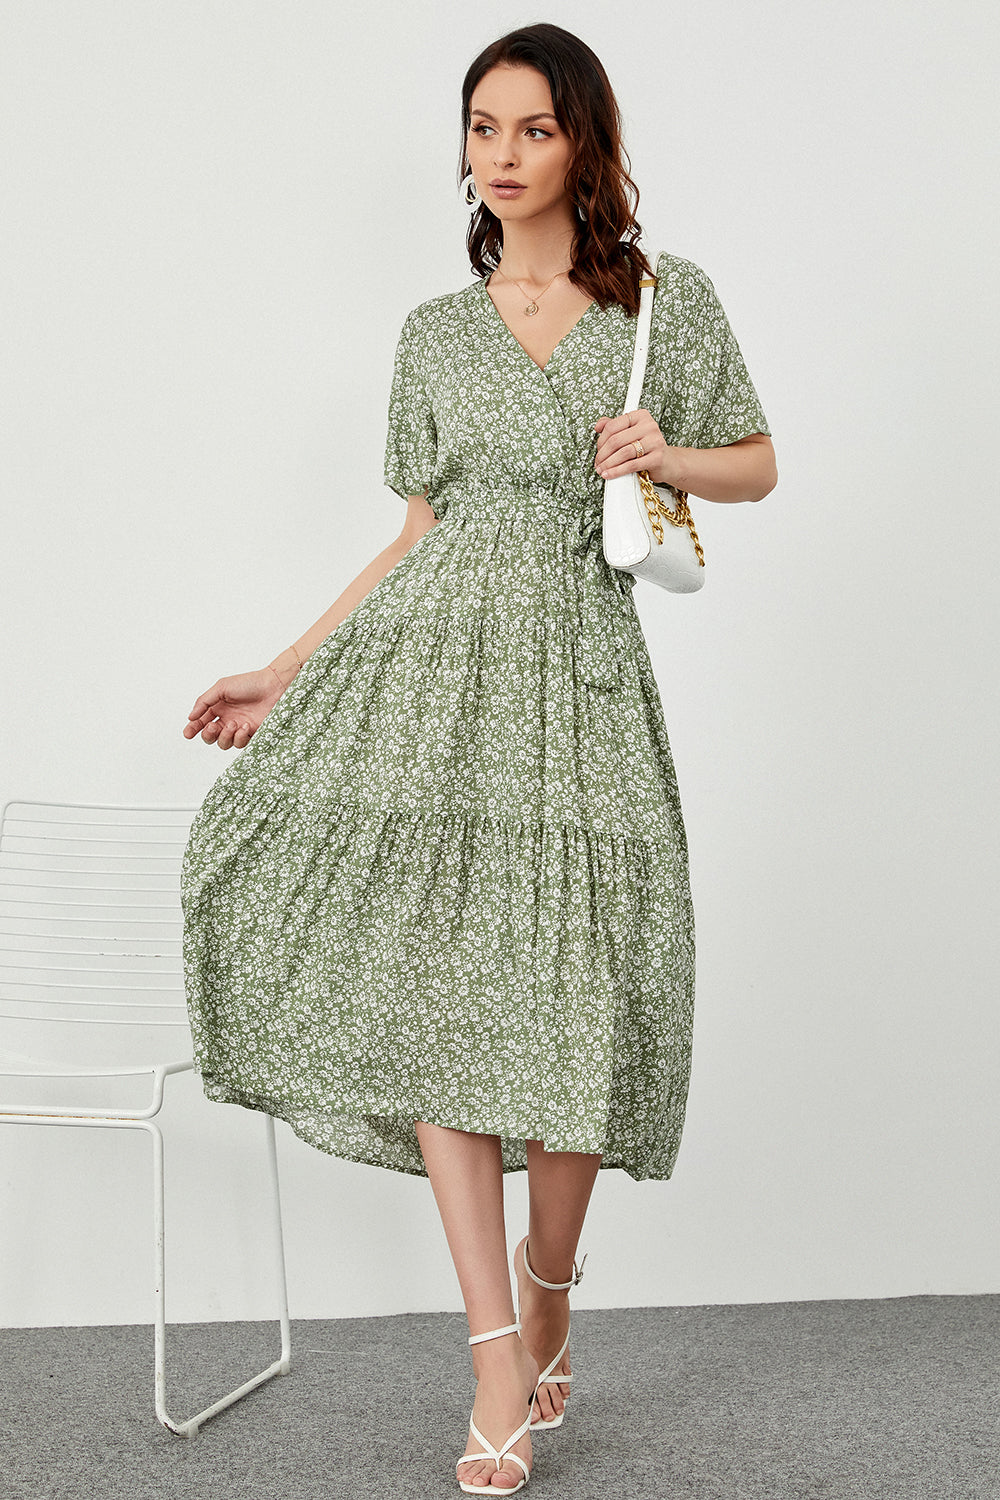 Imprimer robe bohème d'été verte